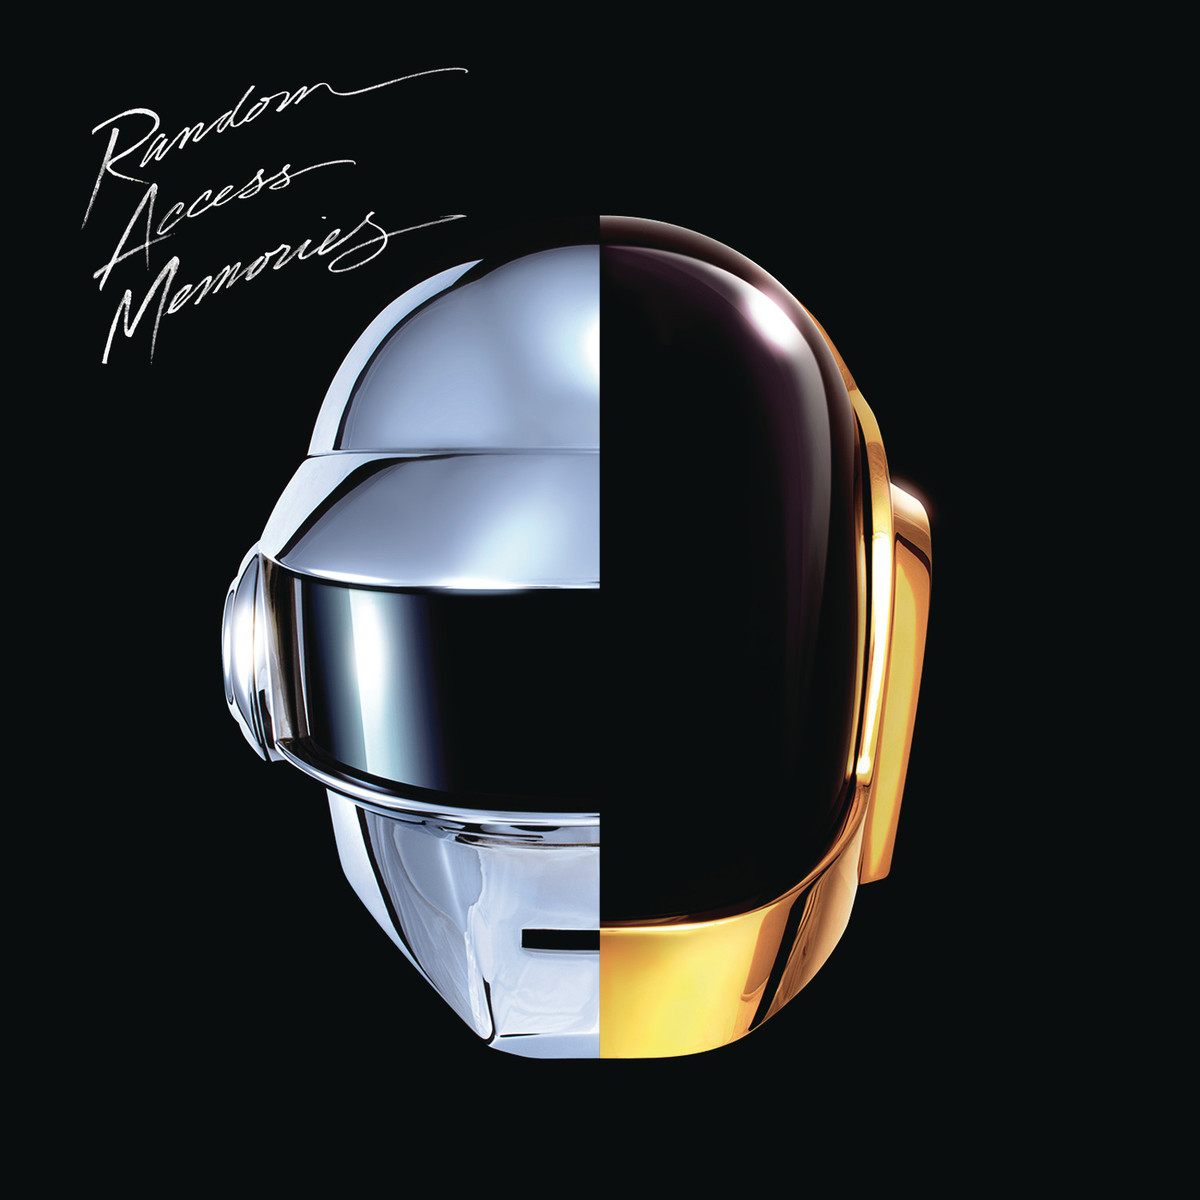 Daft-Punk-Random-Access-Memories-cd-cover